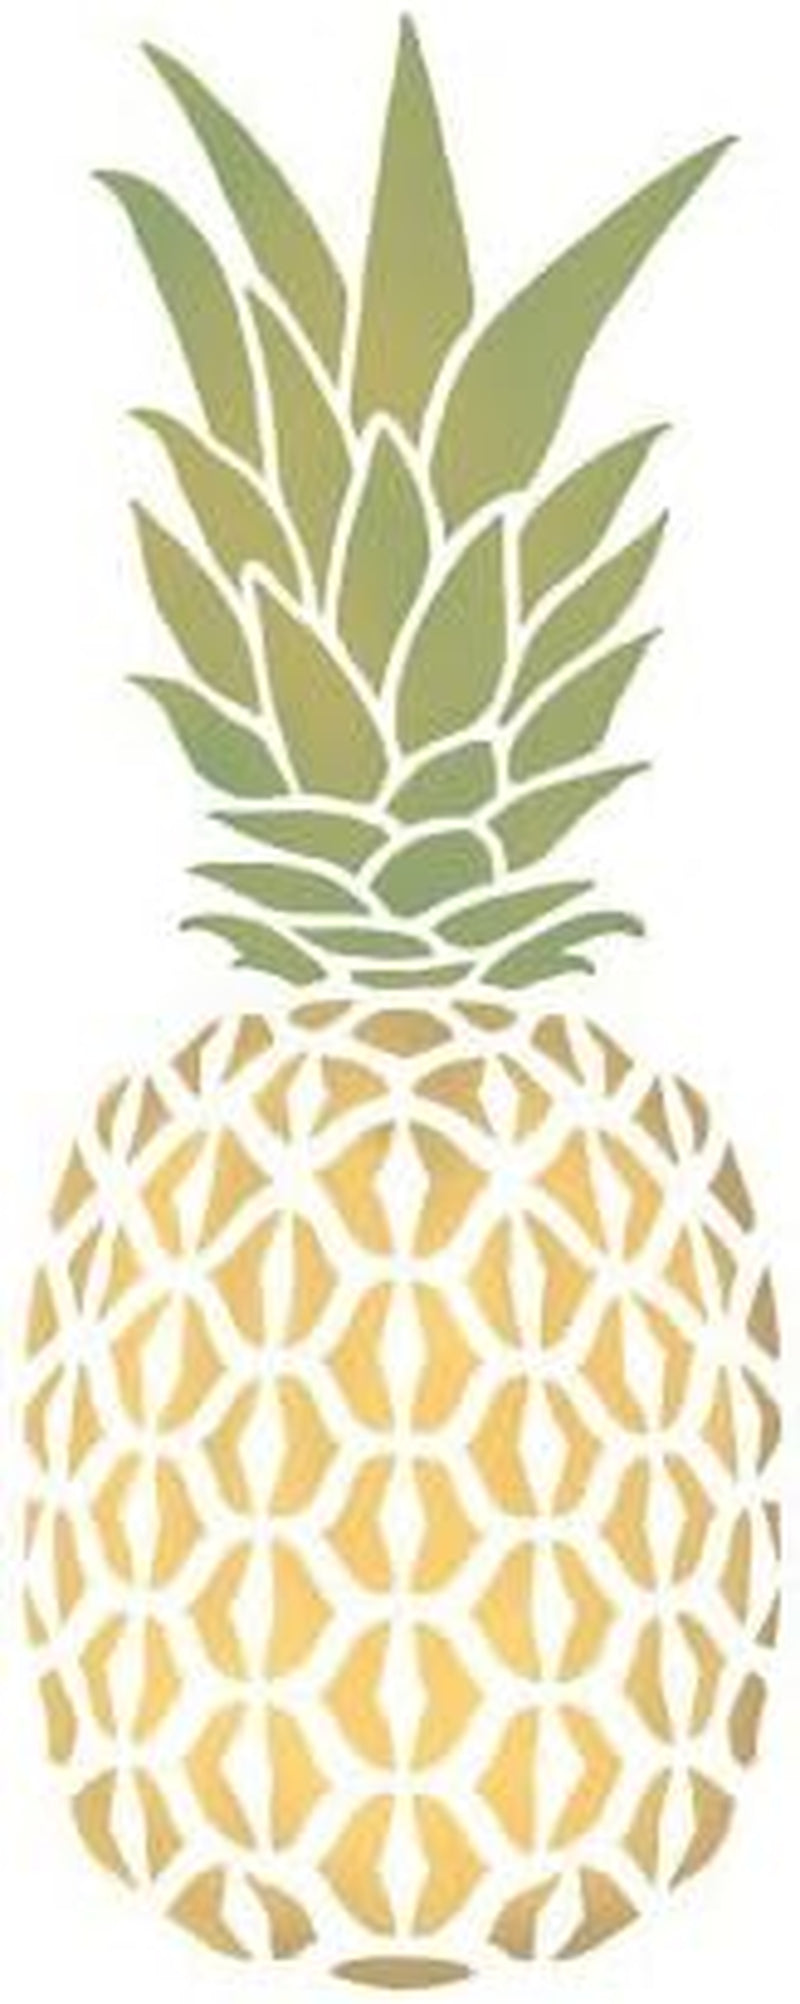 Pineapple Wall Art Stencil - DIY Wall Decor - Reusable Stencil for Home Makeover (Medium)